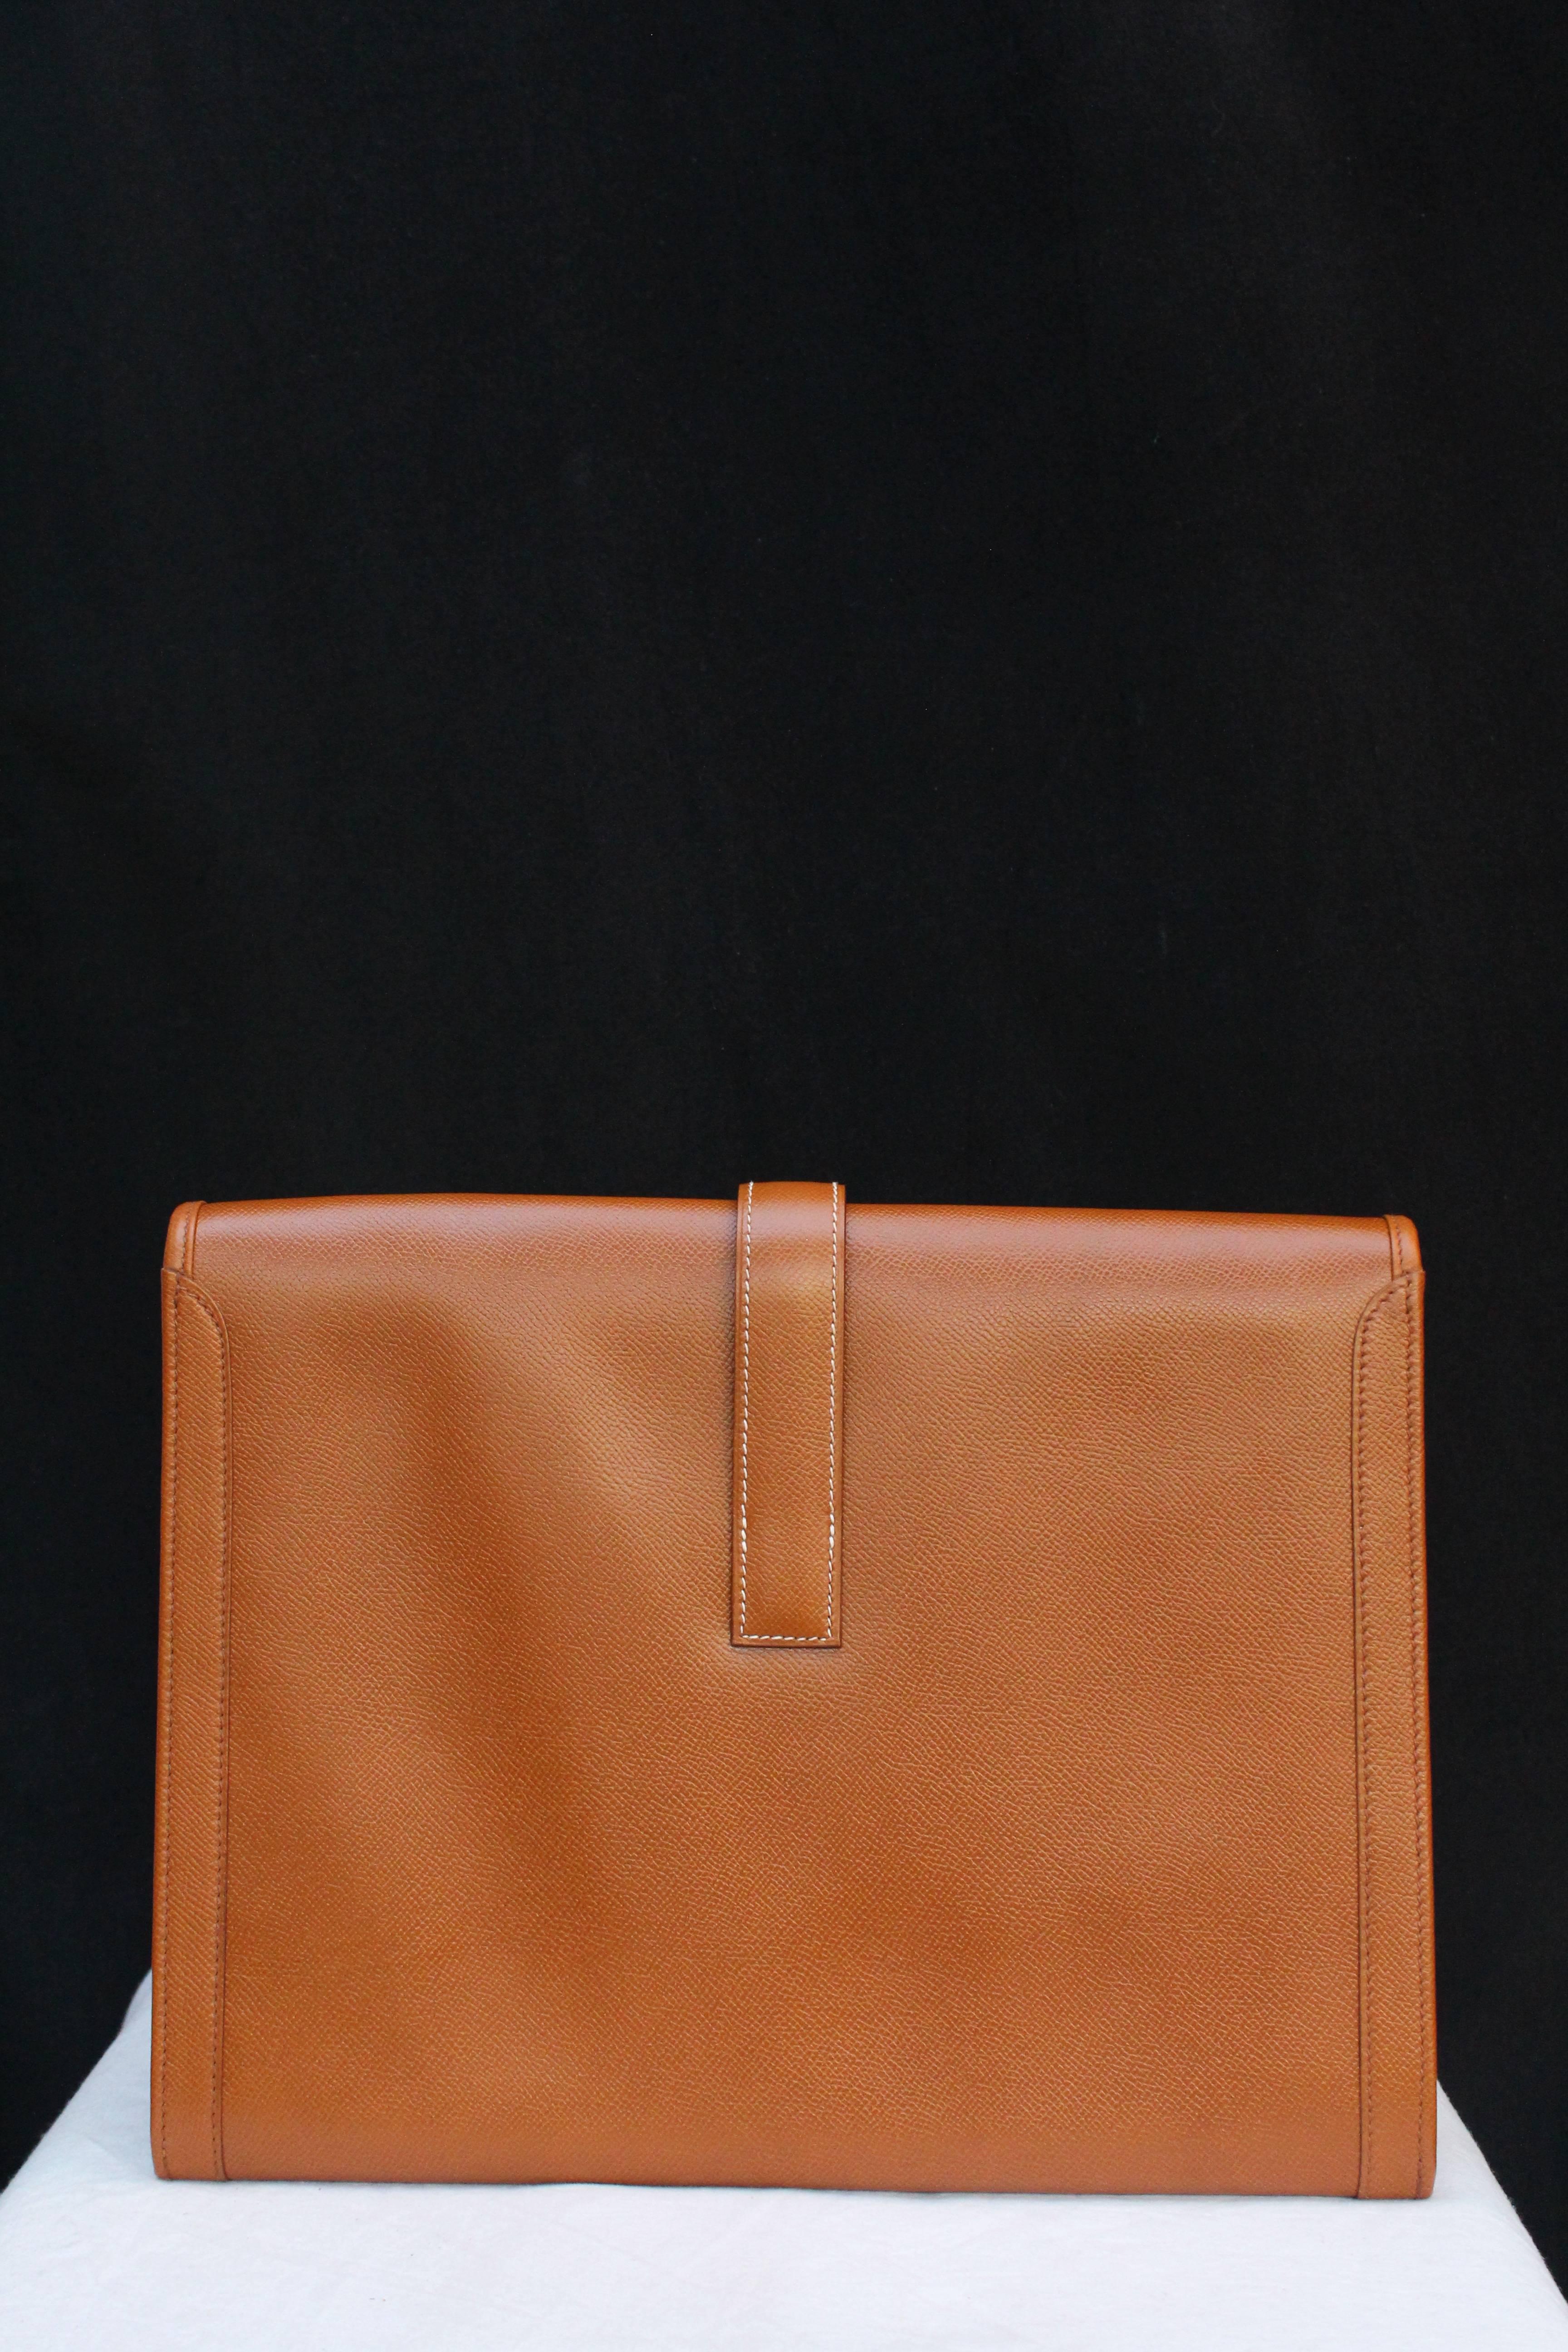 Brown Hermès “Jige” model clutch in tan togo leather